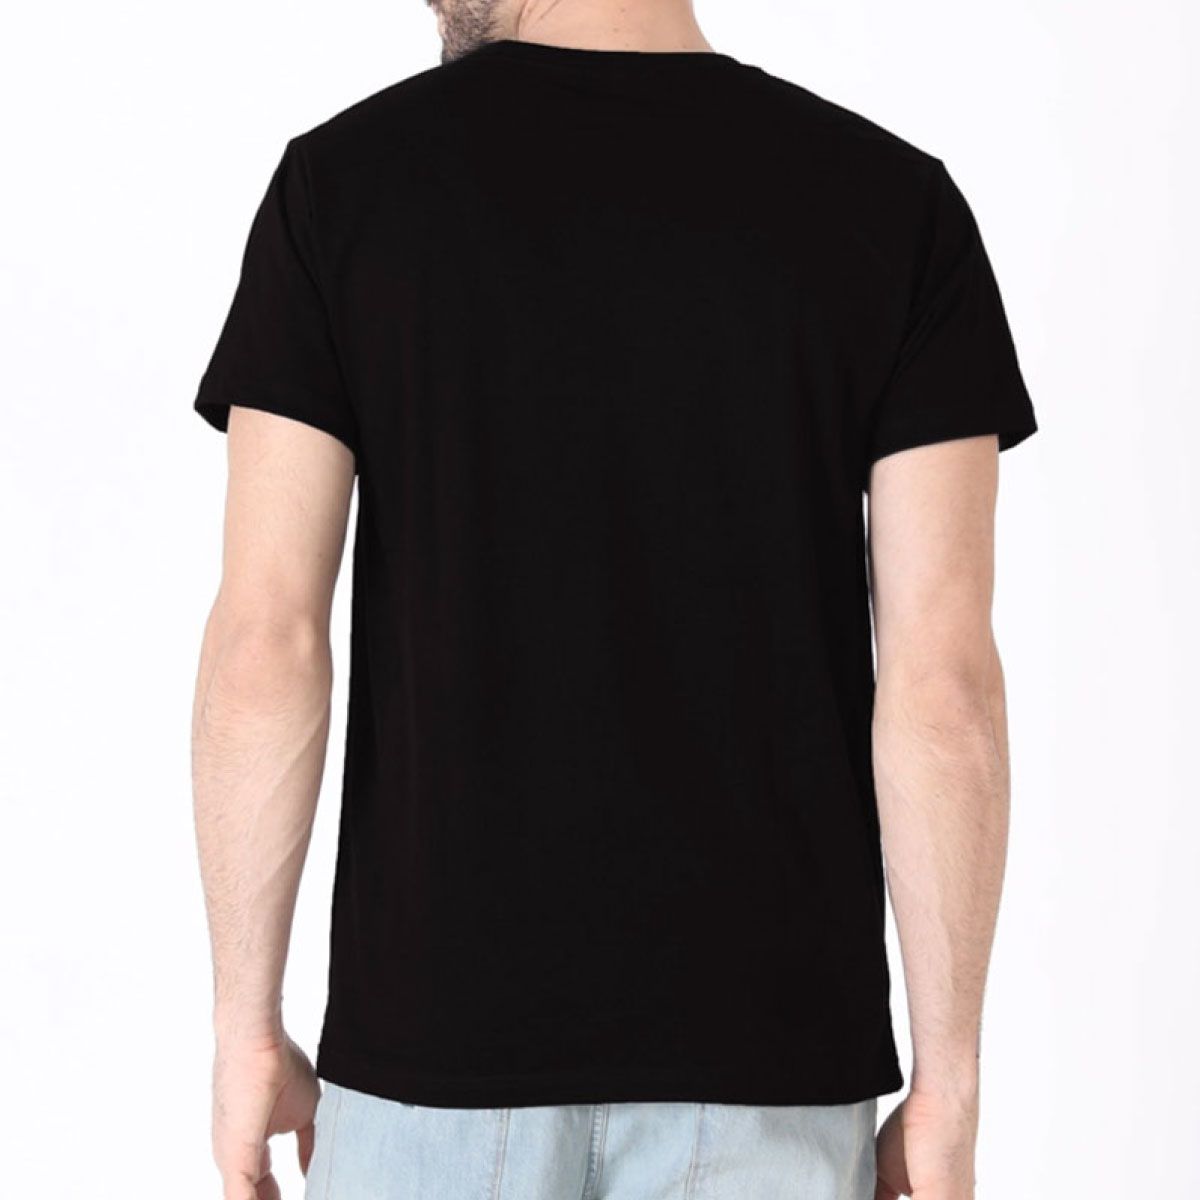 DINKCART Black Round T-Shirt Pack of 1 - Buy DINKCART Black Round T ...